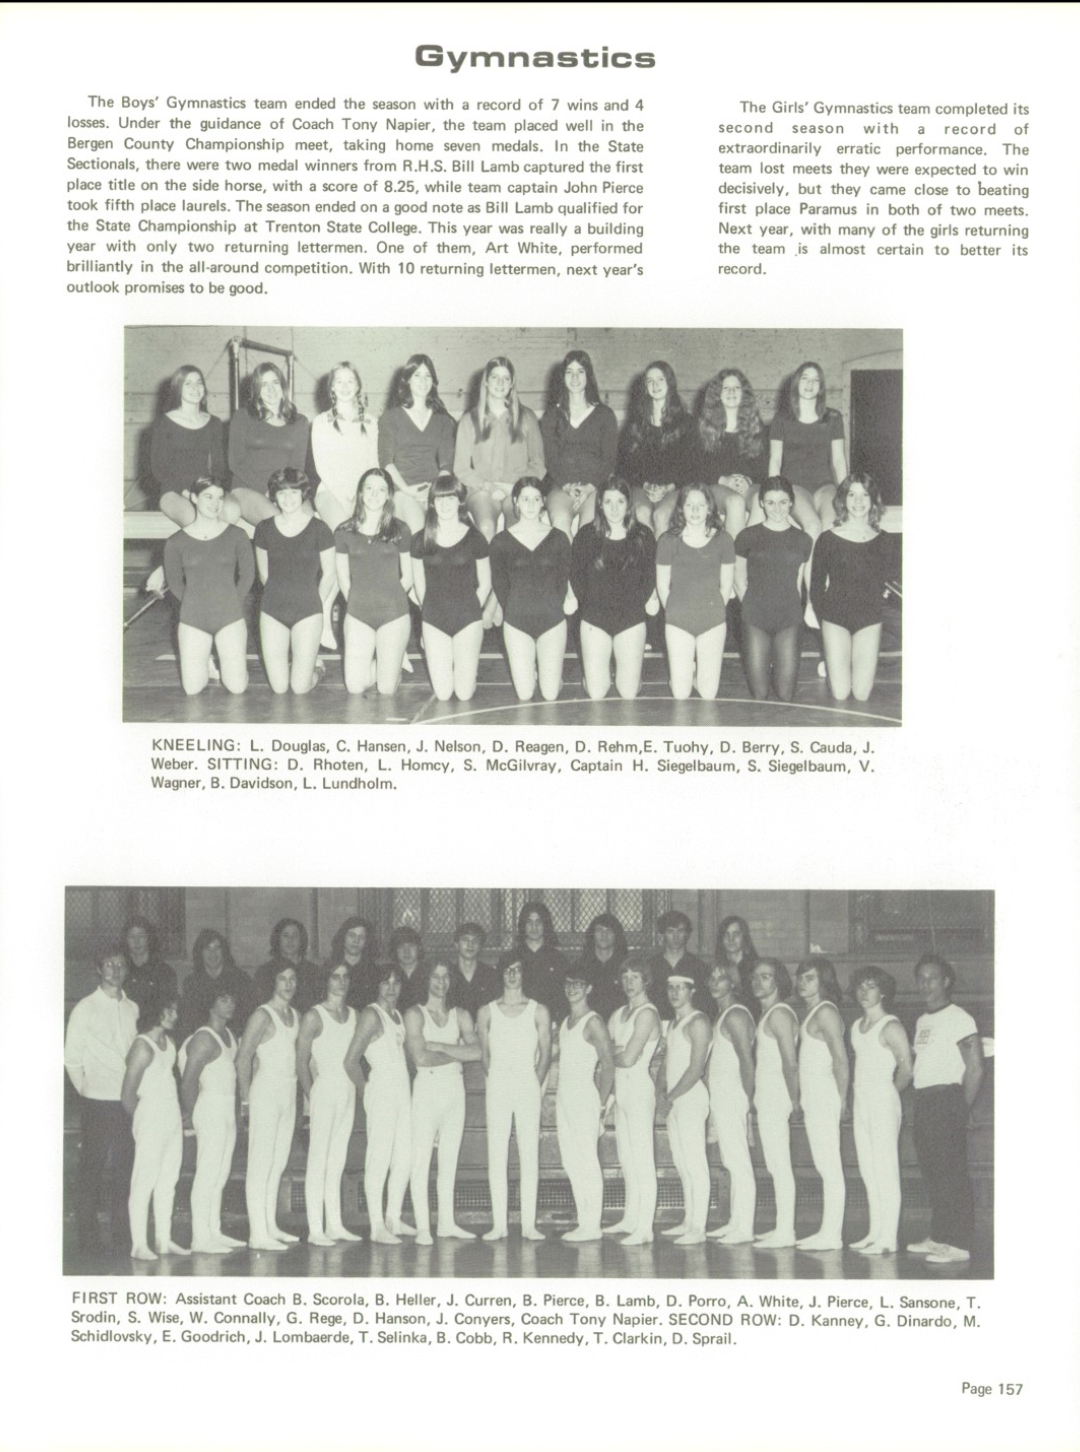 1973 Boys’ Gymnastics Team